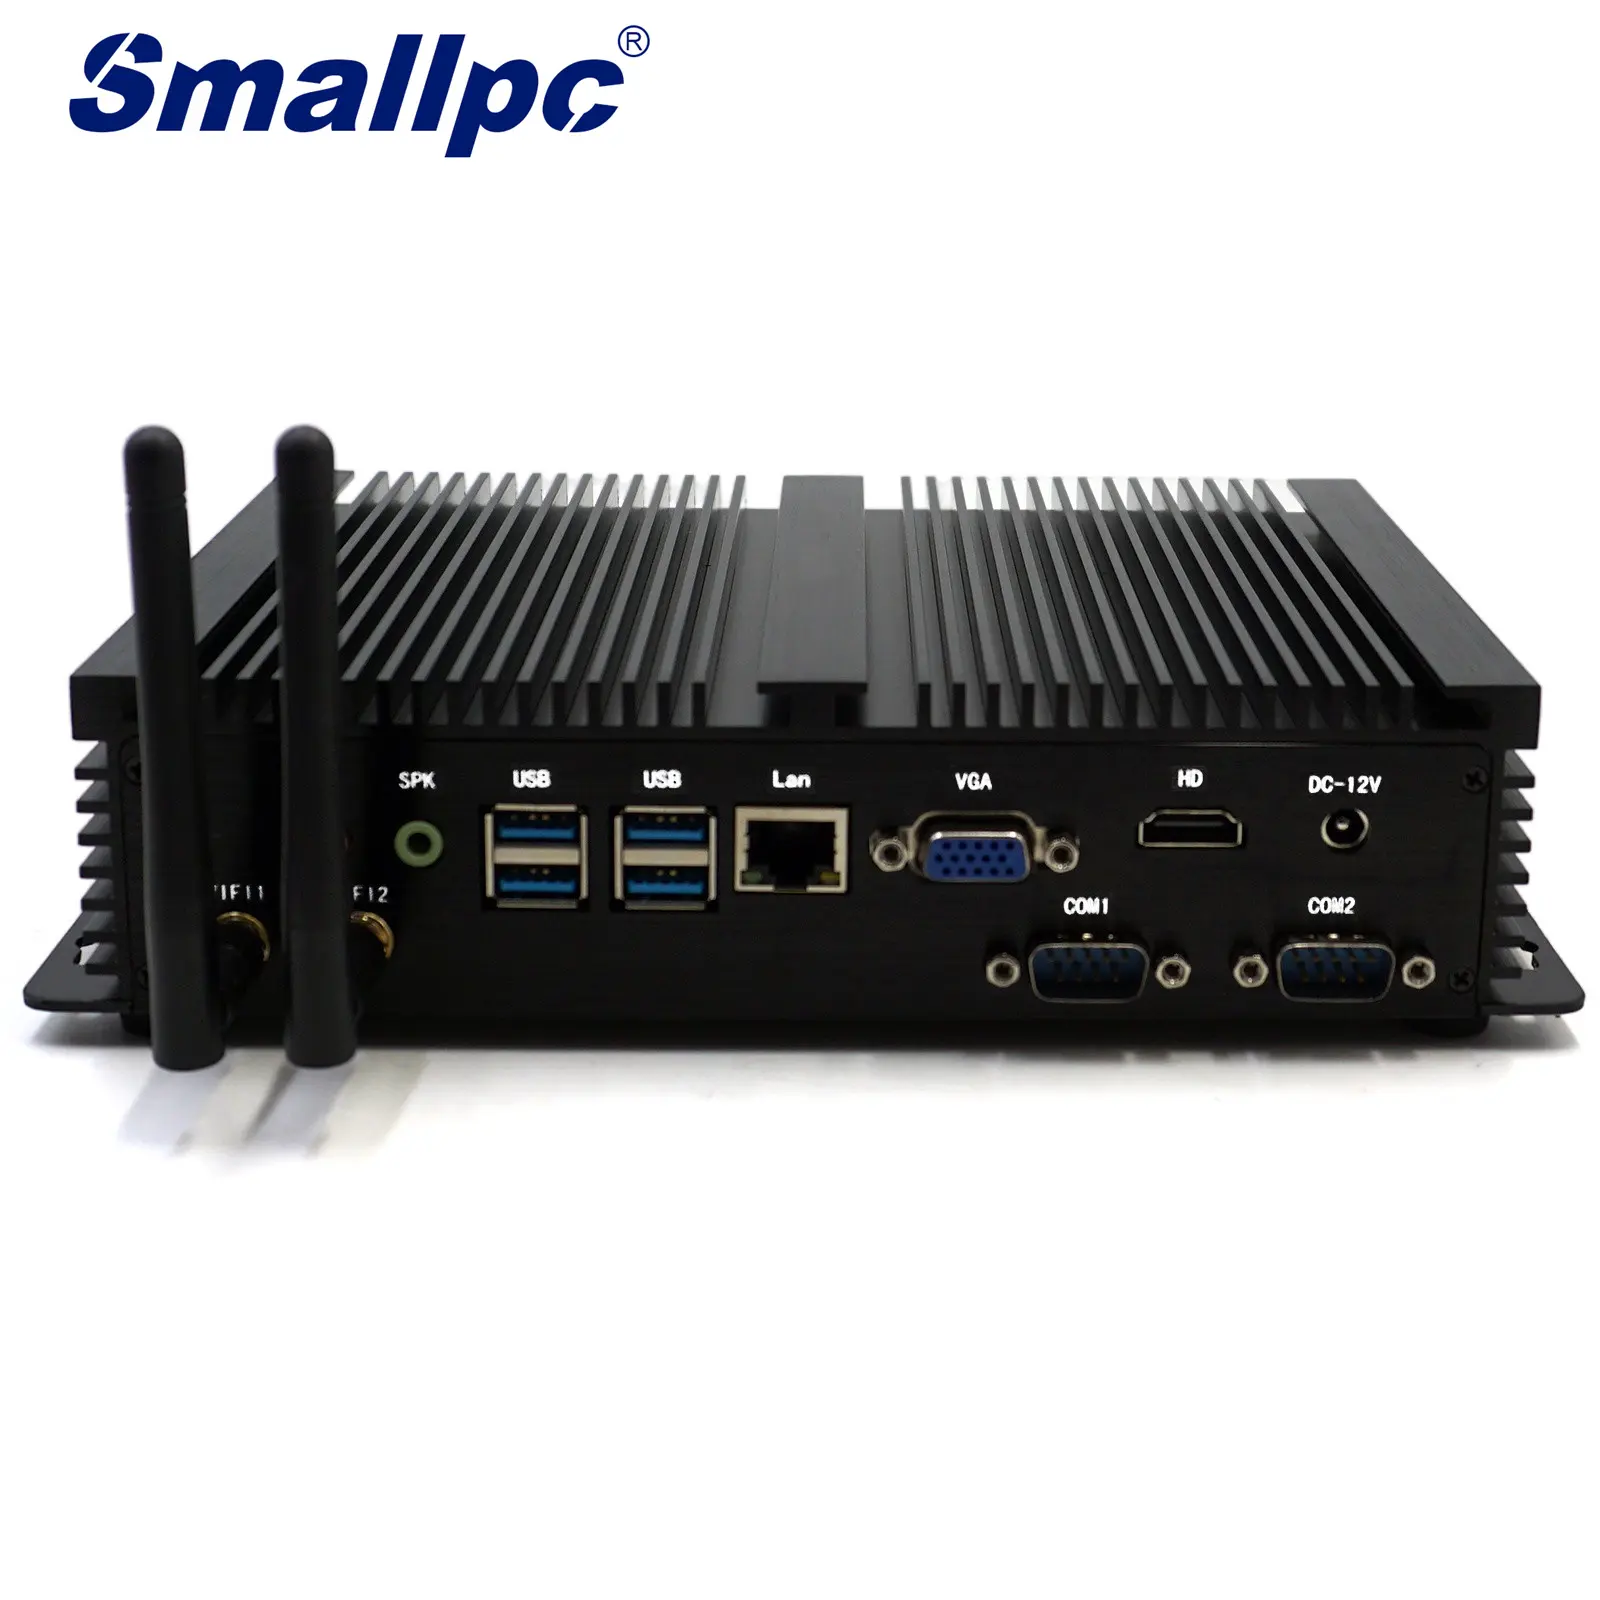 SmallPC OEM/ODM Product Hot Price Single Network Port Win 10 4K Dual Display Port Industrial Fanless Mini PC